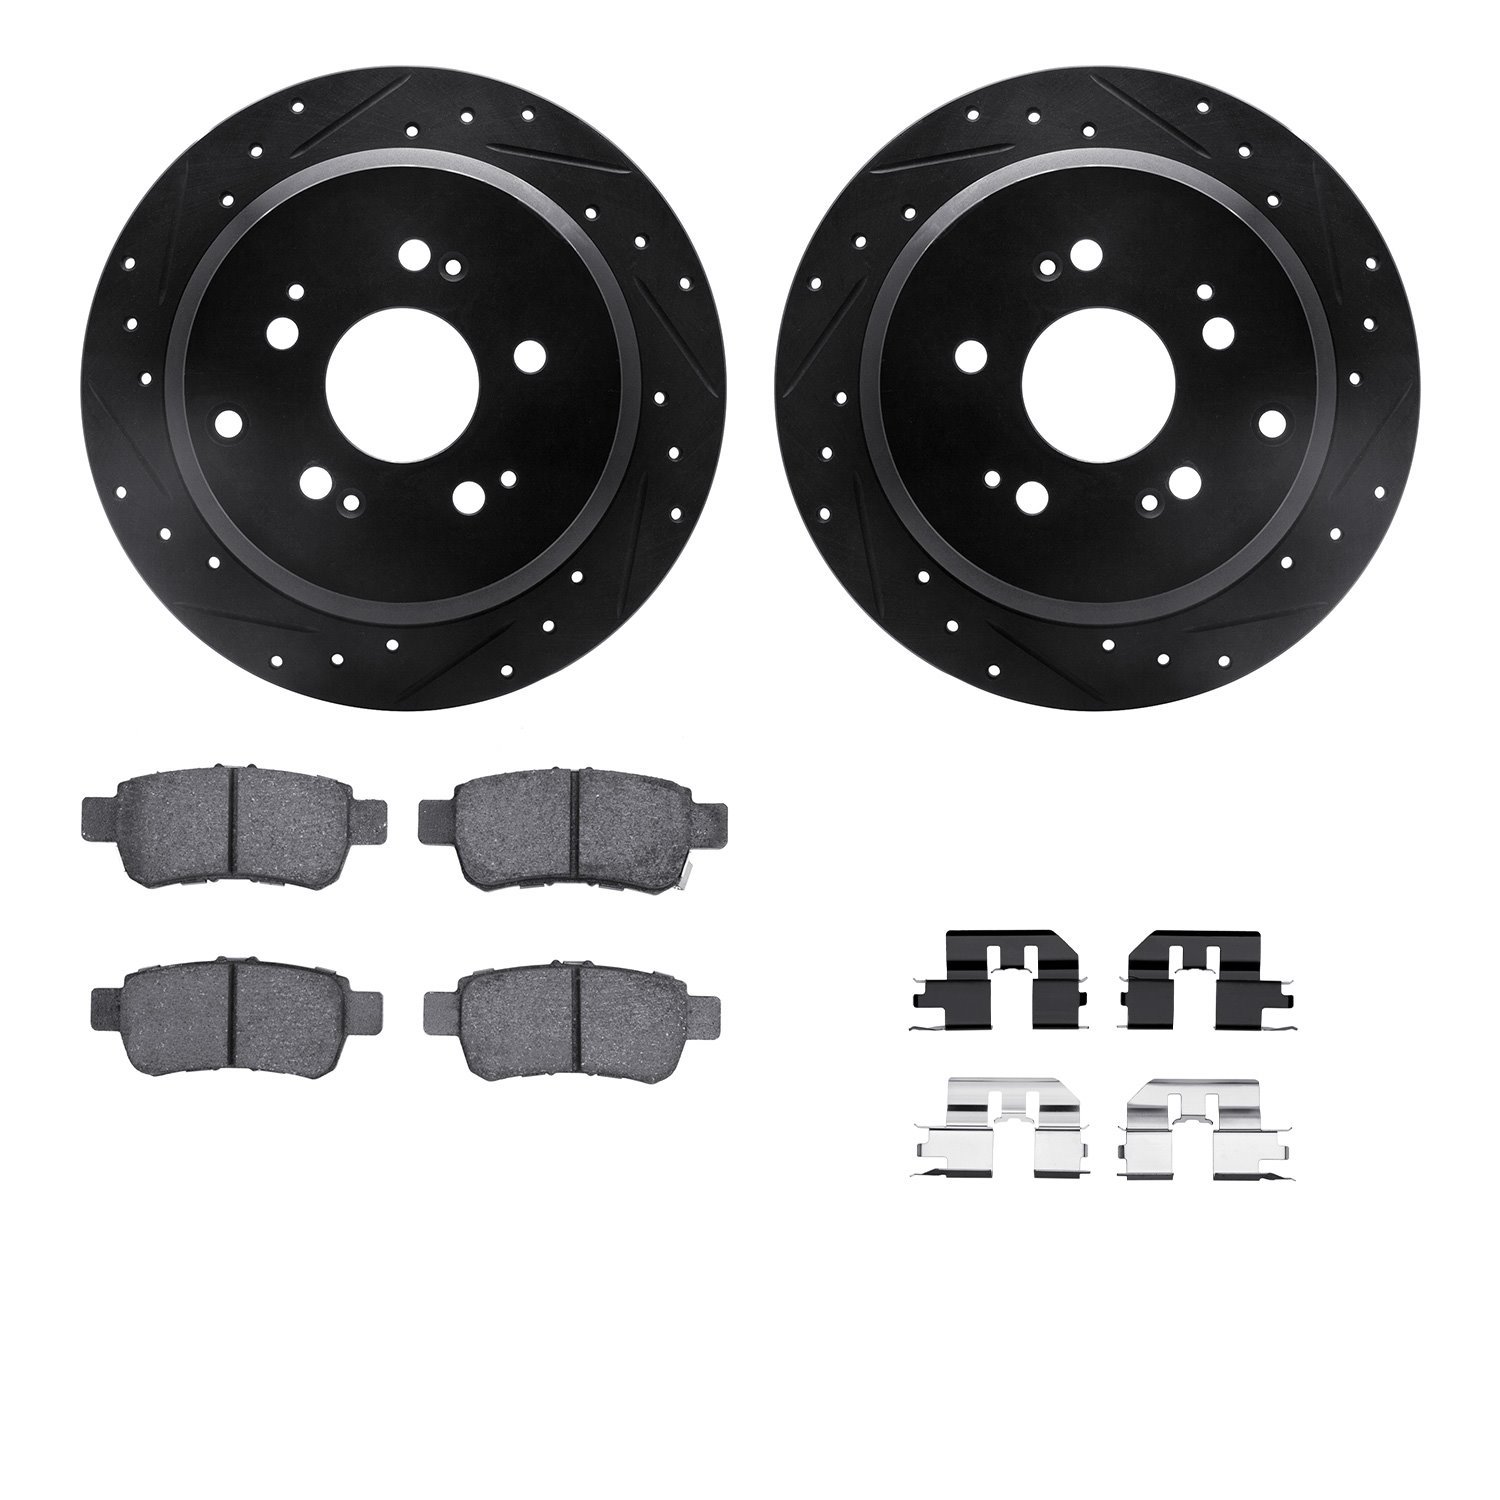 8312-59077 Drilled/Slotted Brake Rotors with 3000-Series Ceramic Brake Pads Kit & Hardware [Black], 2005-2010 Acura/Honda, Posit